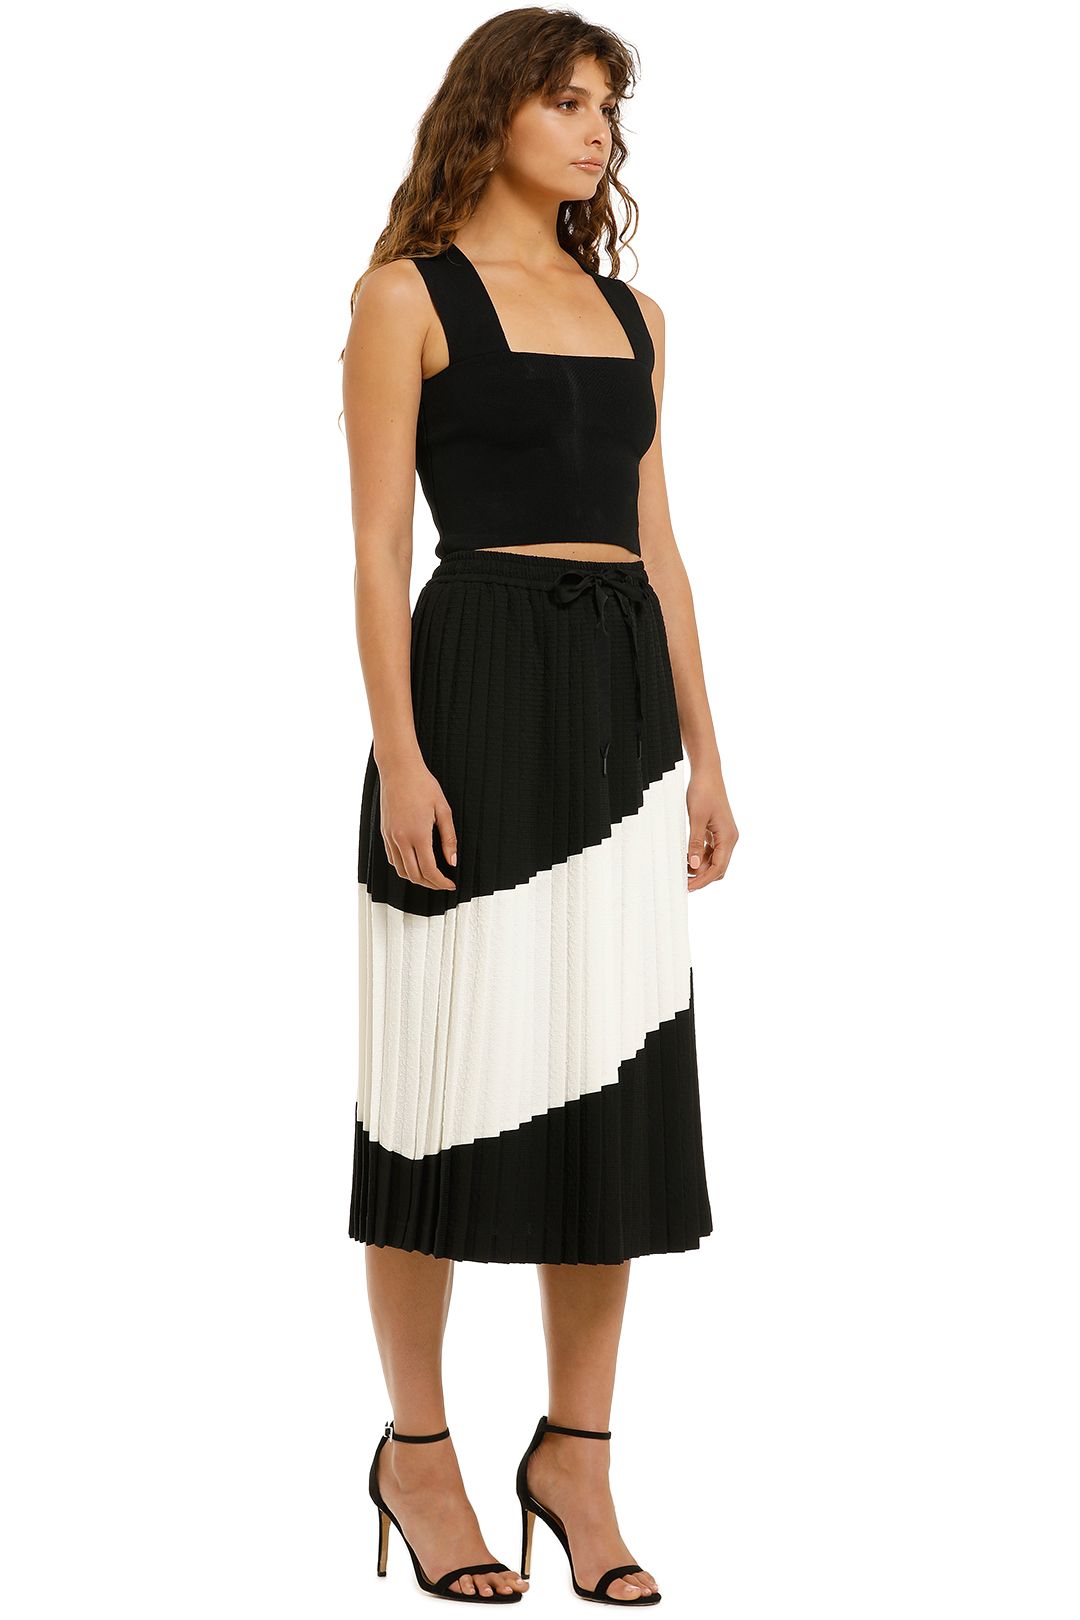 Rebecca-Vallance-Gia-Skirt-Black-And-White-Side